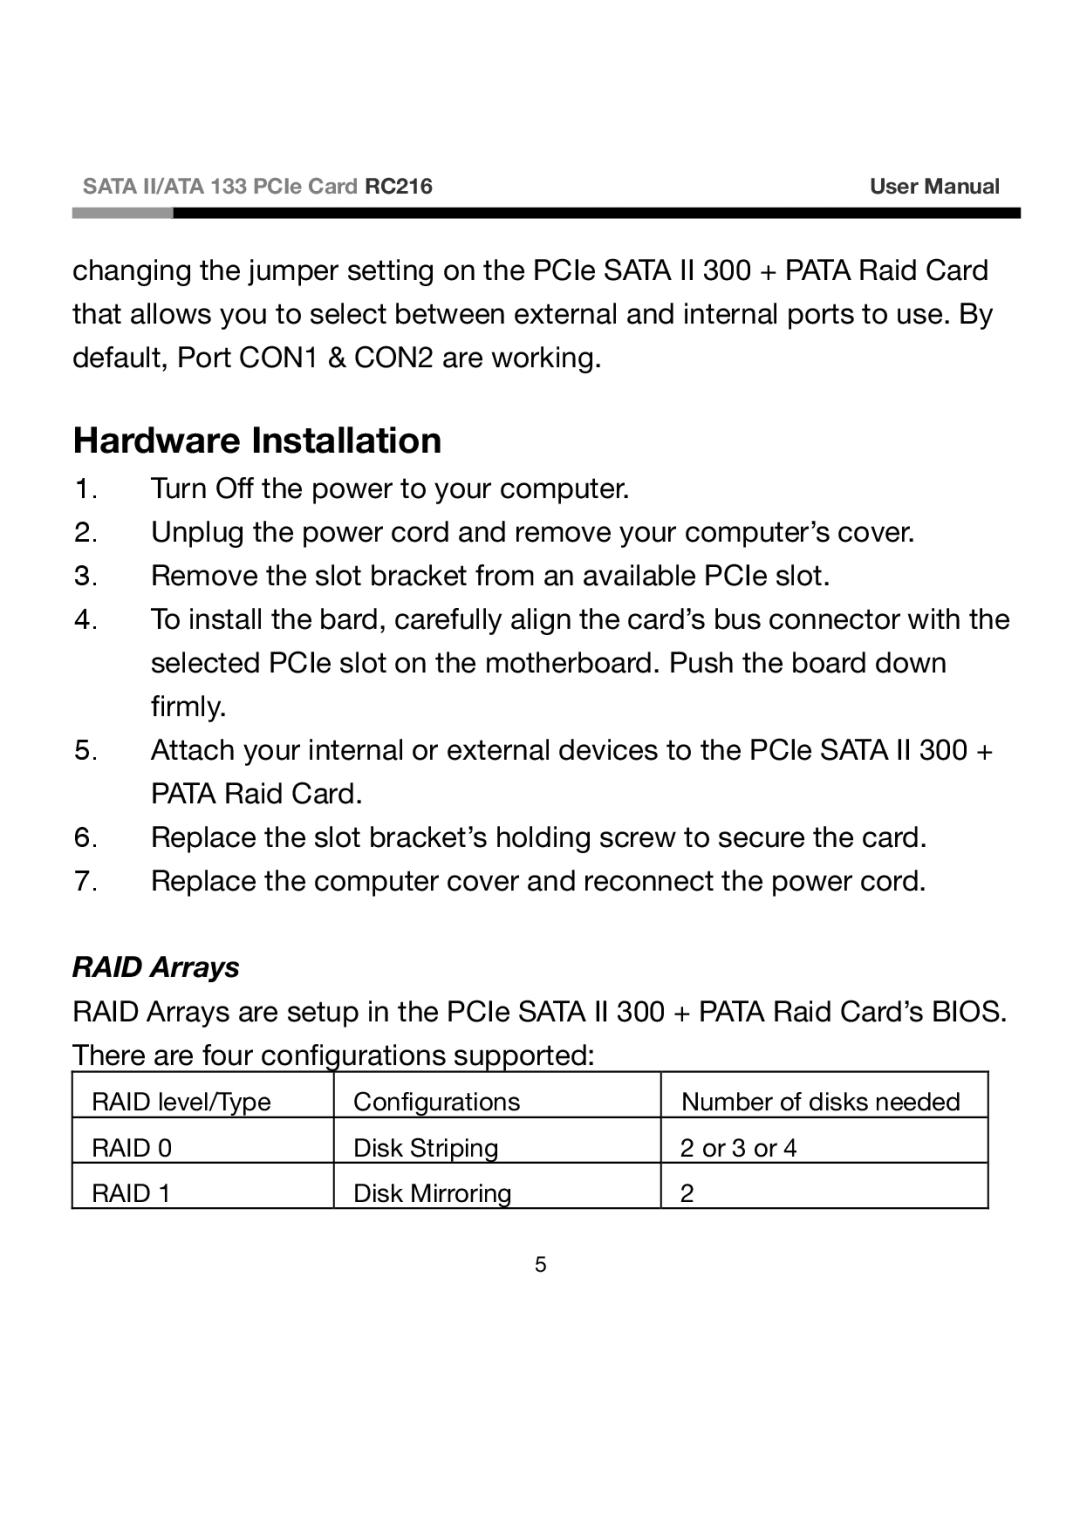 Rosewill RC216 user manual Hardware Installation, RAID Arrays 